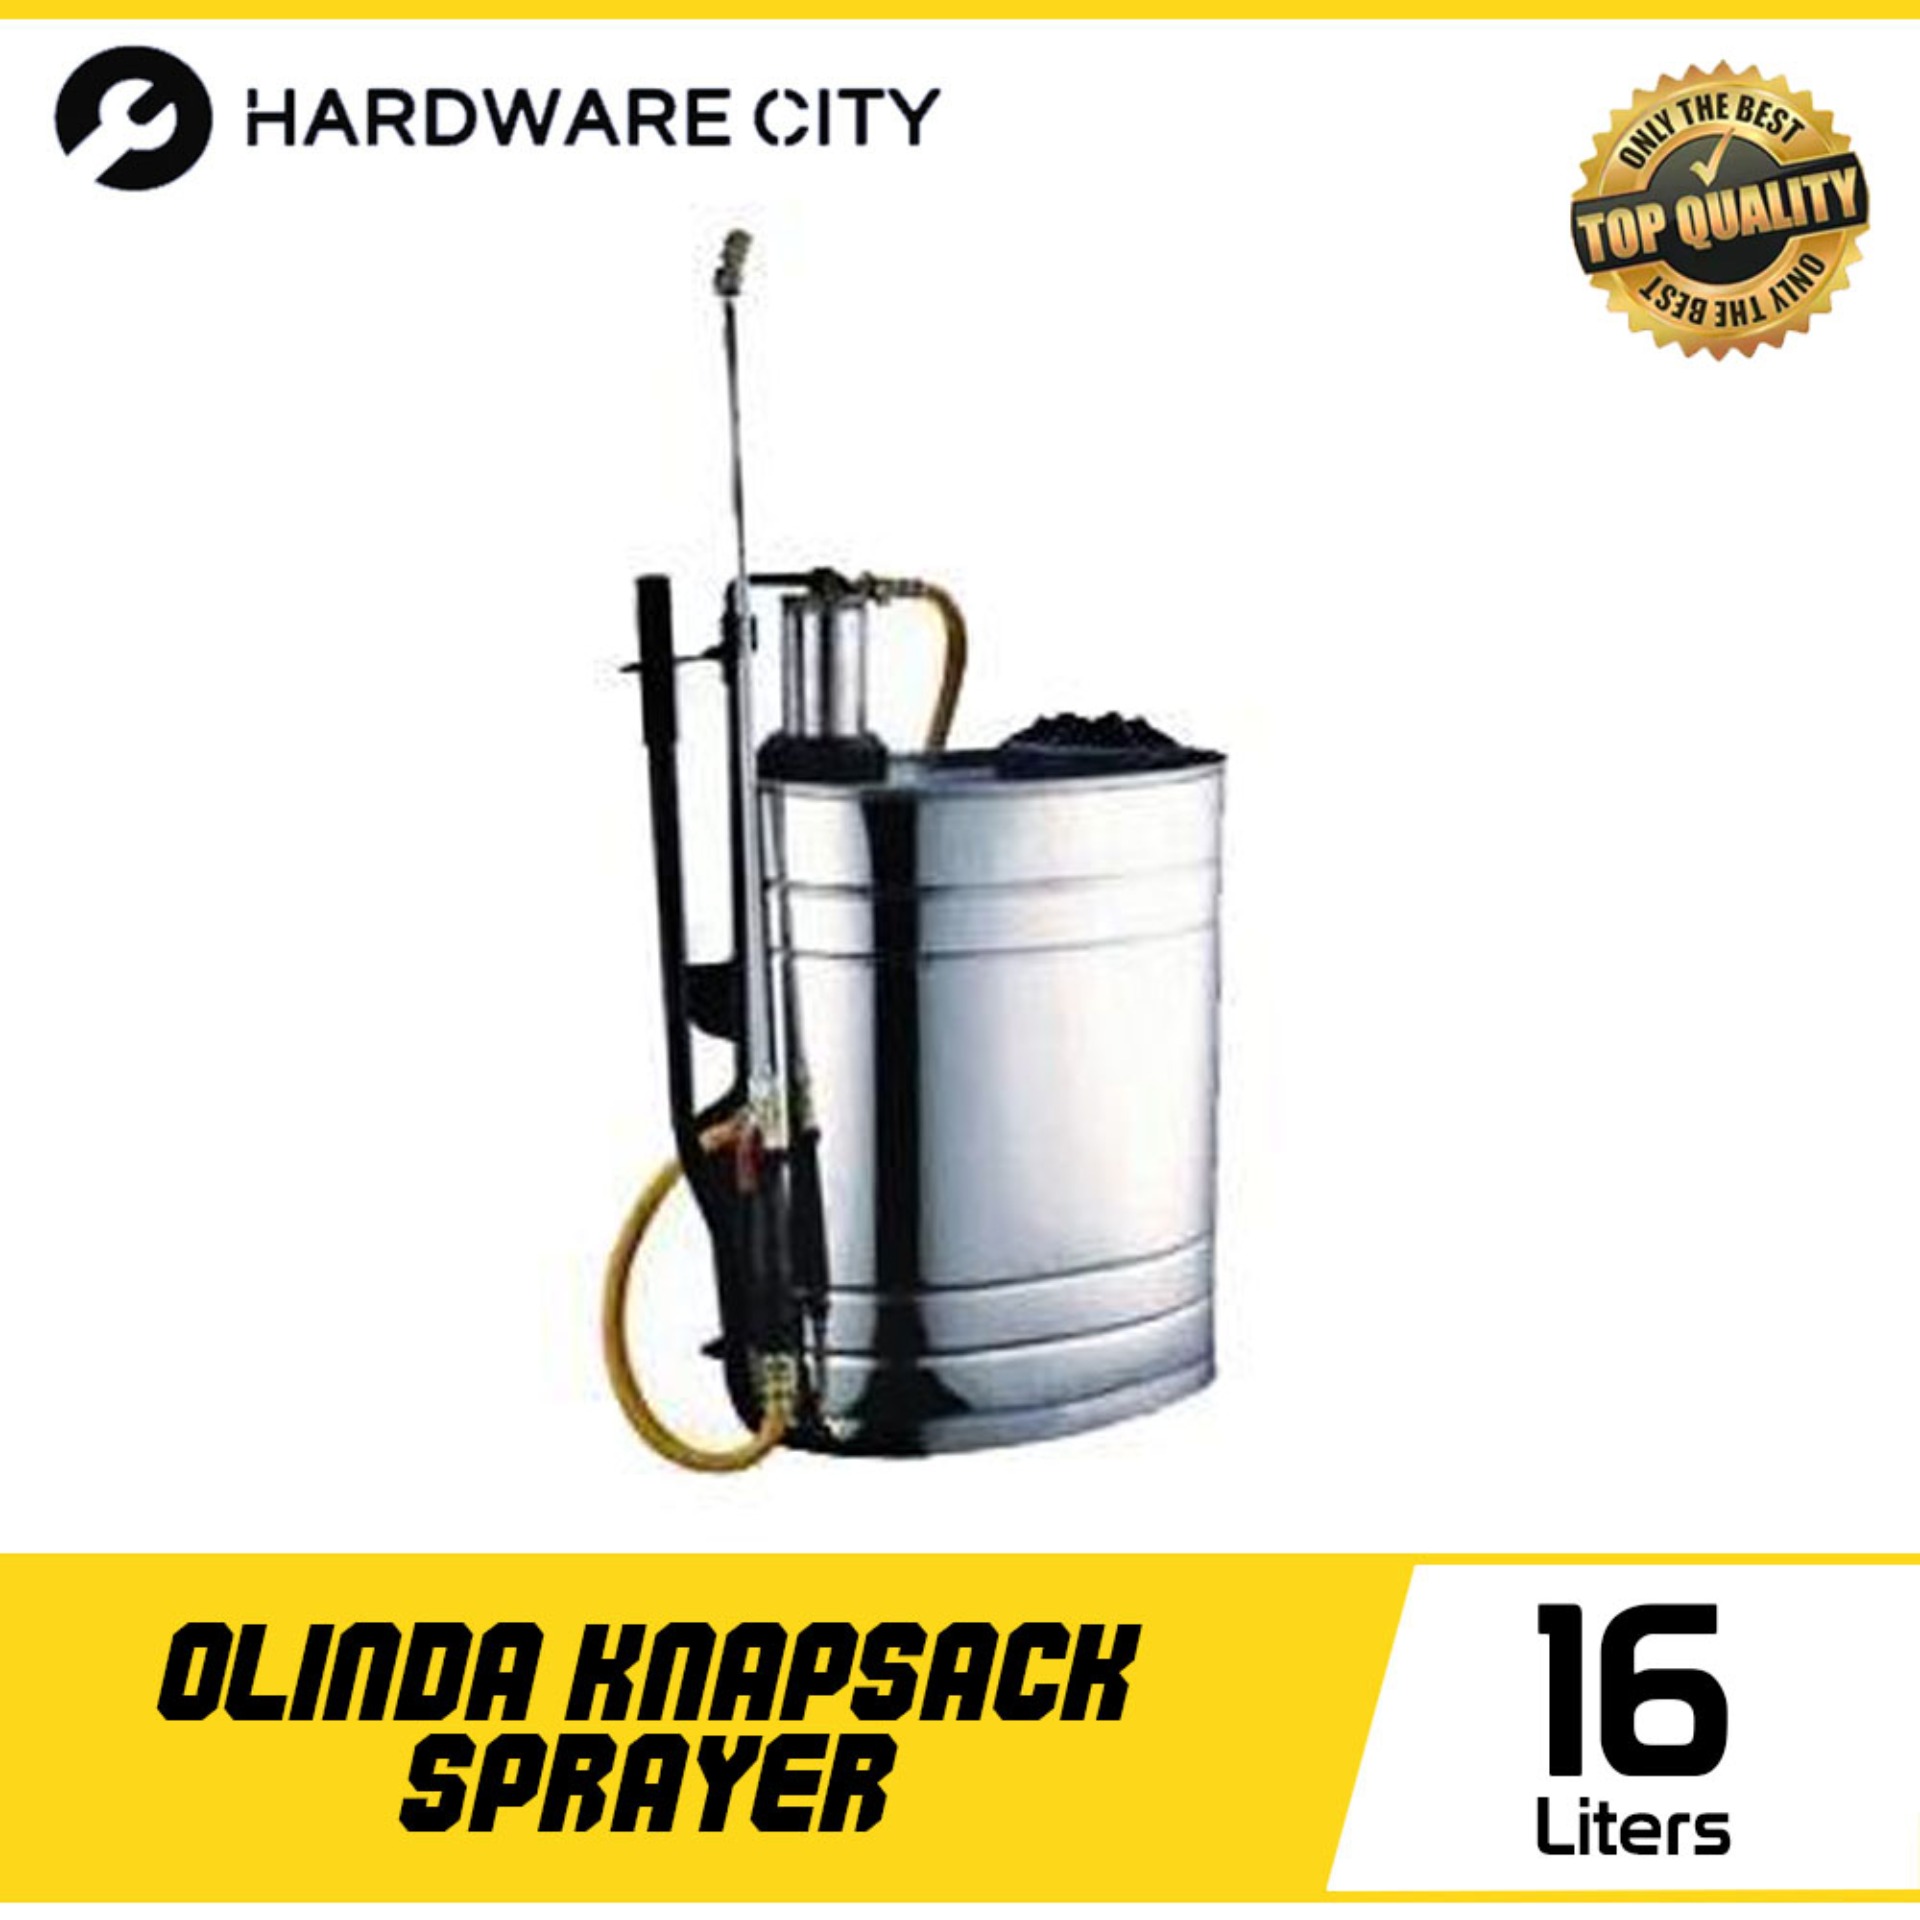 Pixpro Knapsack Sprayer 16 Liters - Infoupdate.org